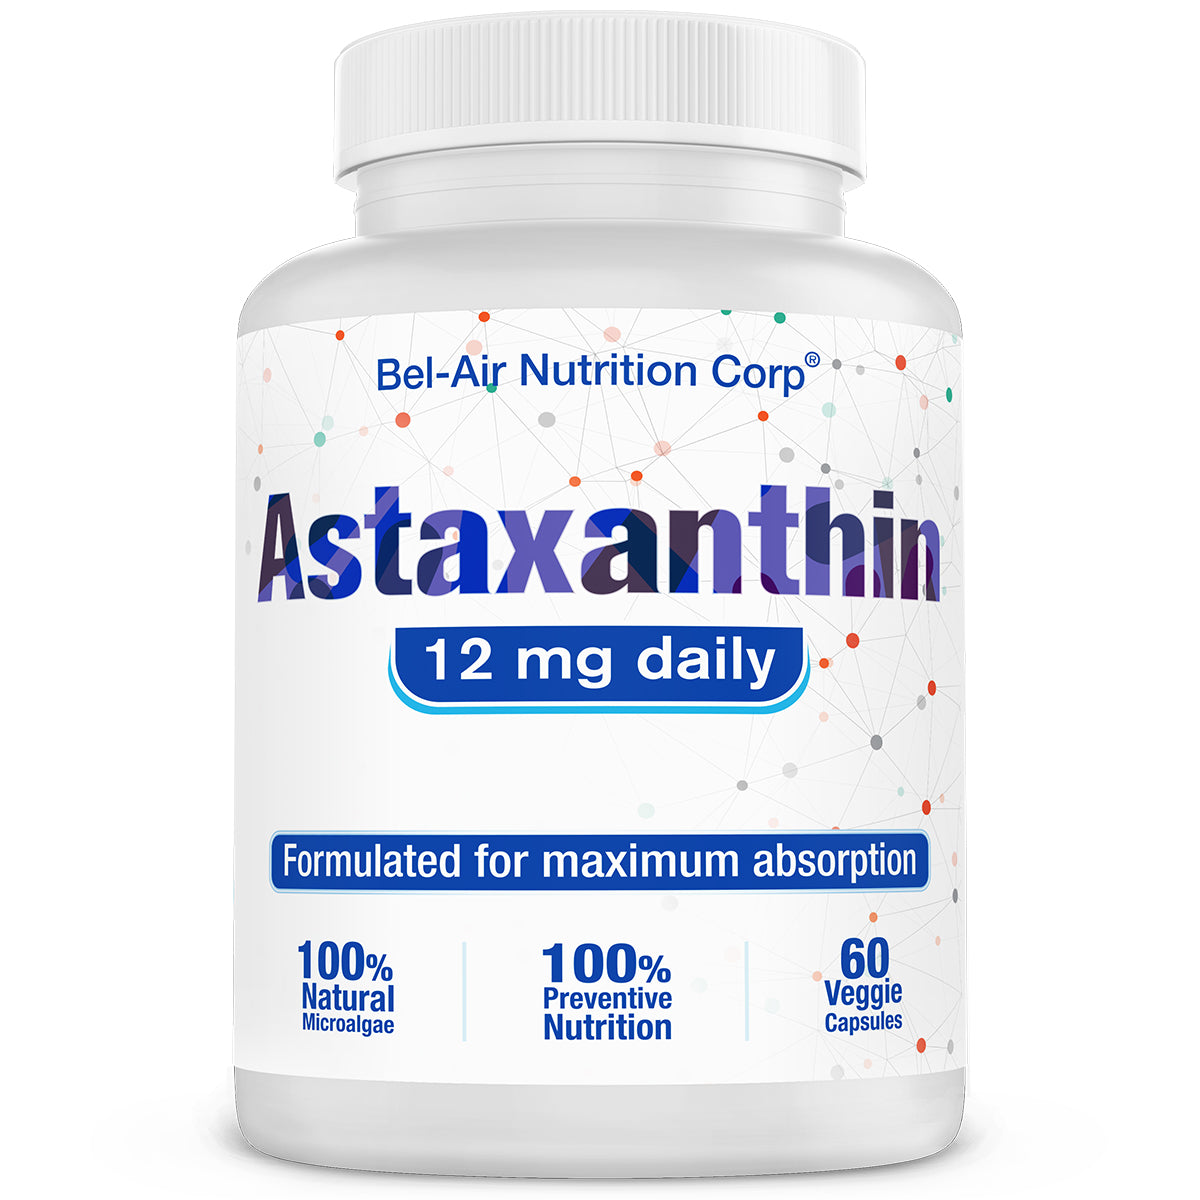 astaxanthin supplement, heart health supplements,